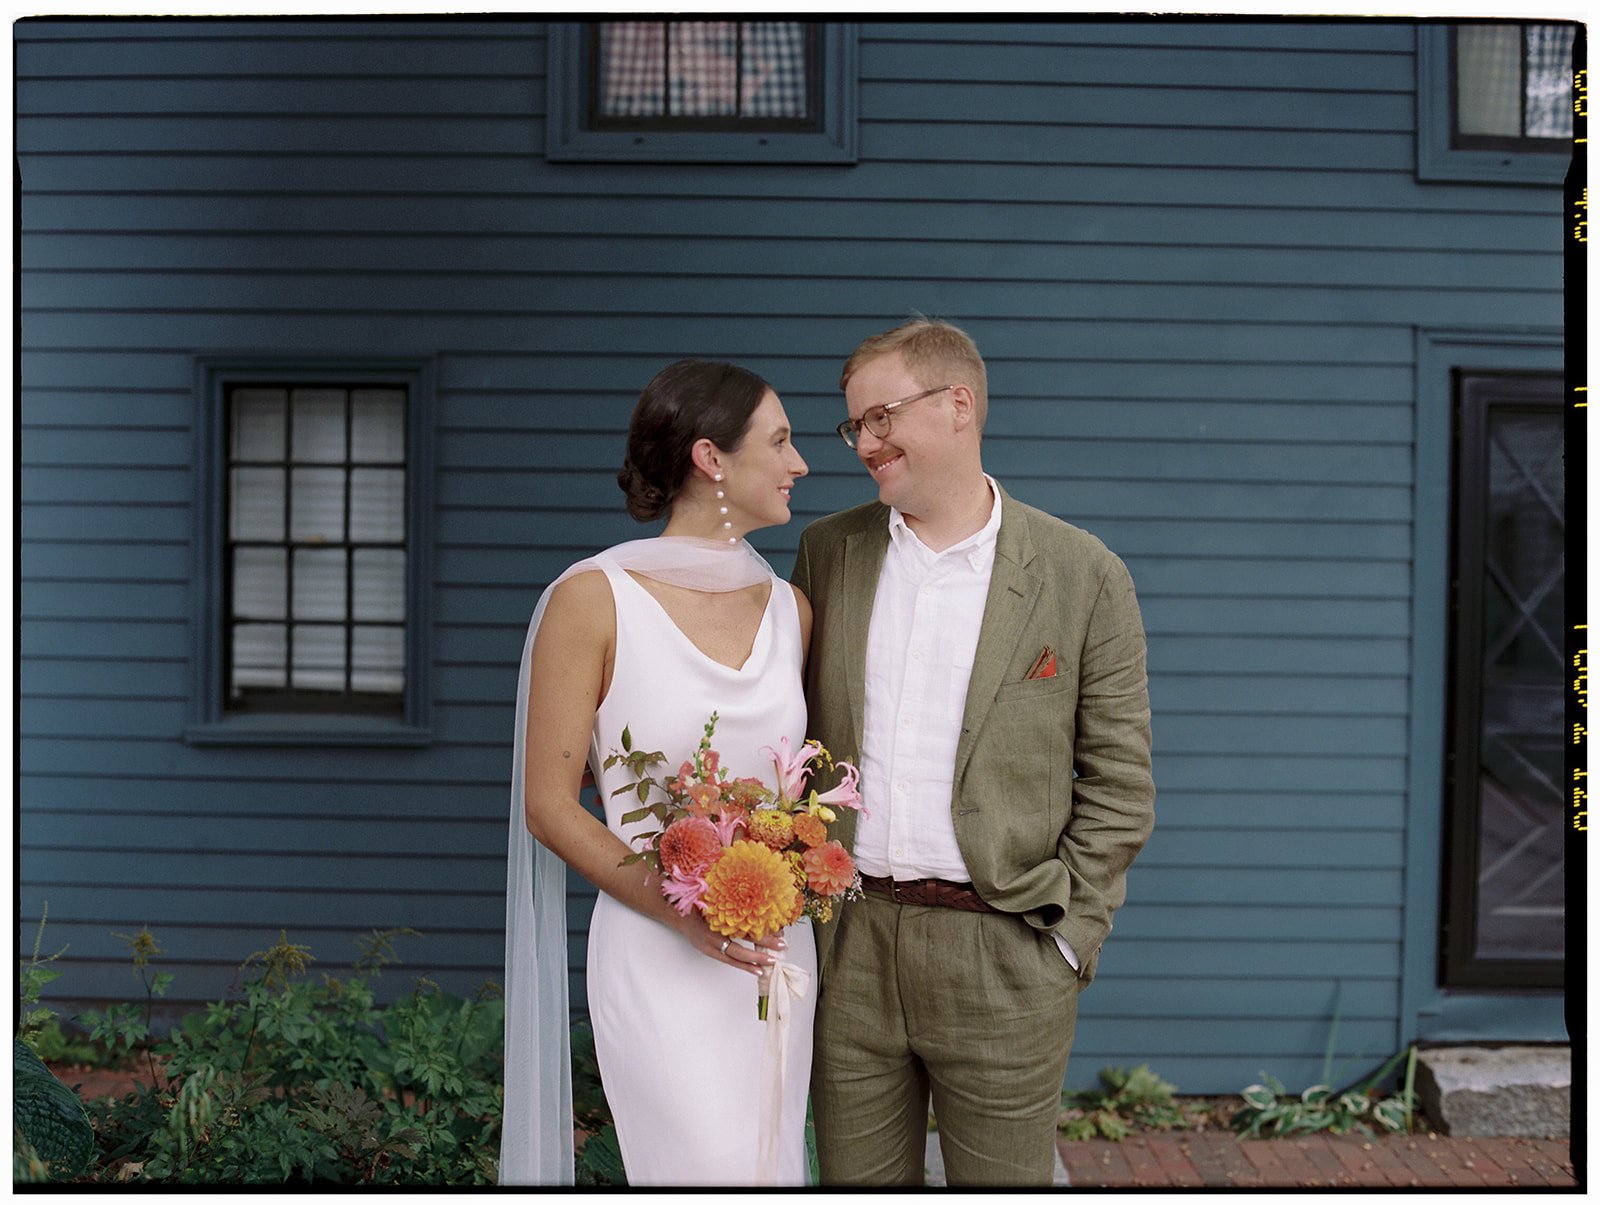 Best-Film-35mm-Austin-Wedding-Photographer-Portland-Maine-City-Hall-Super8-38.jpg